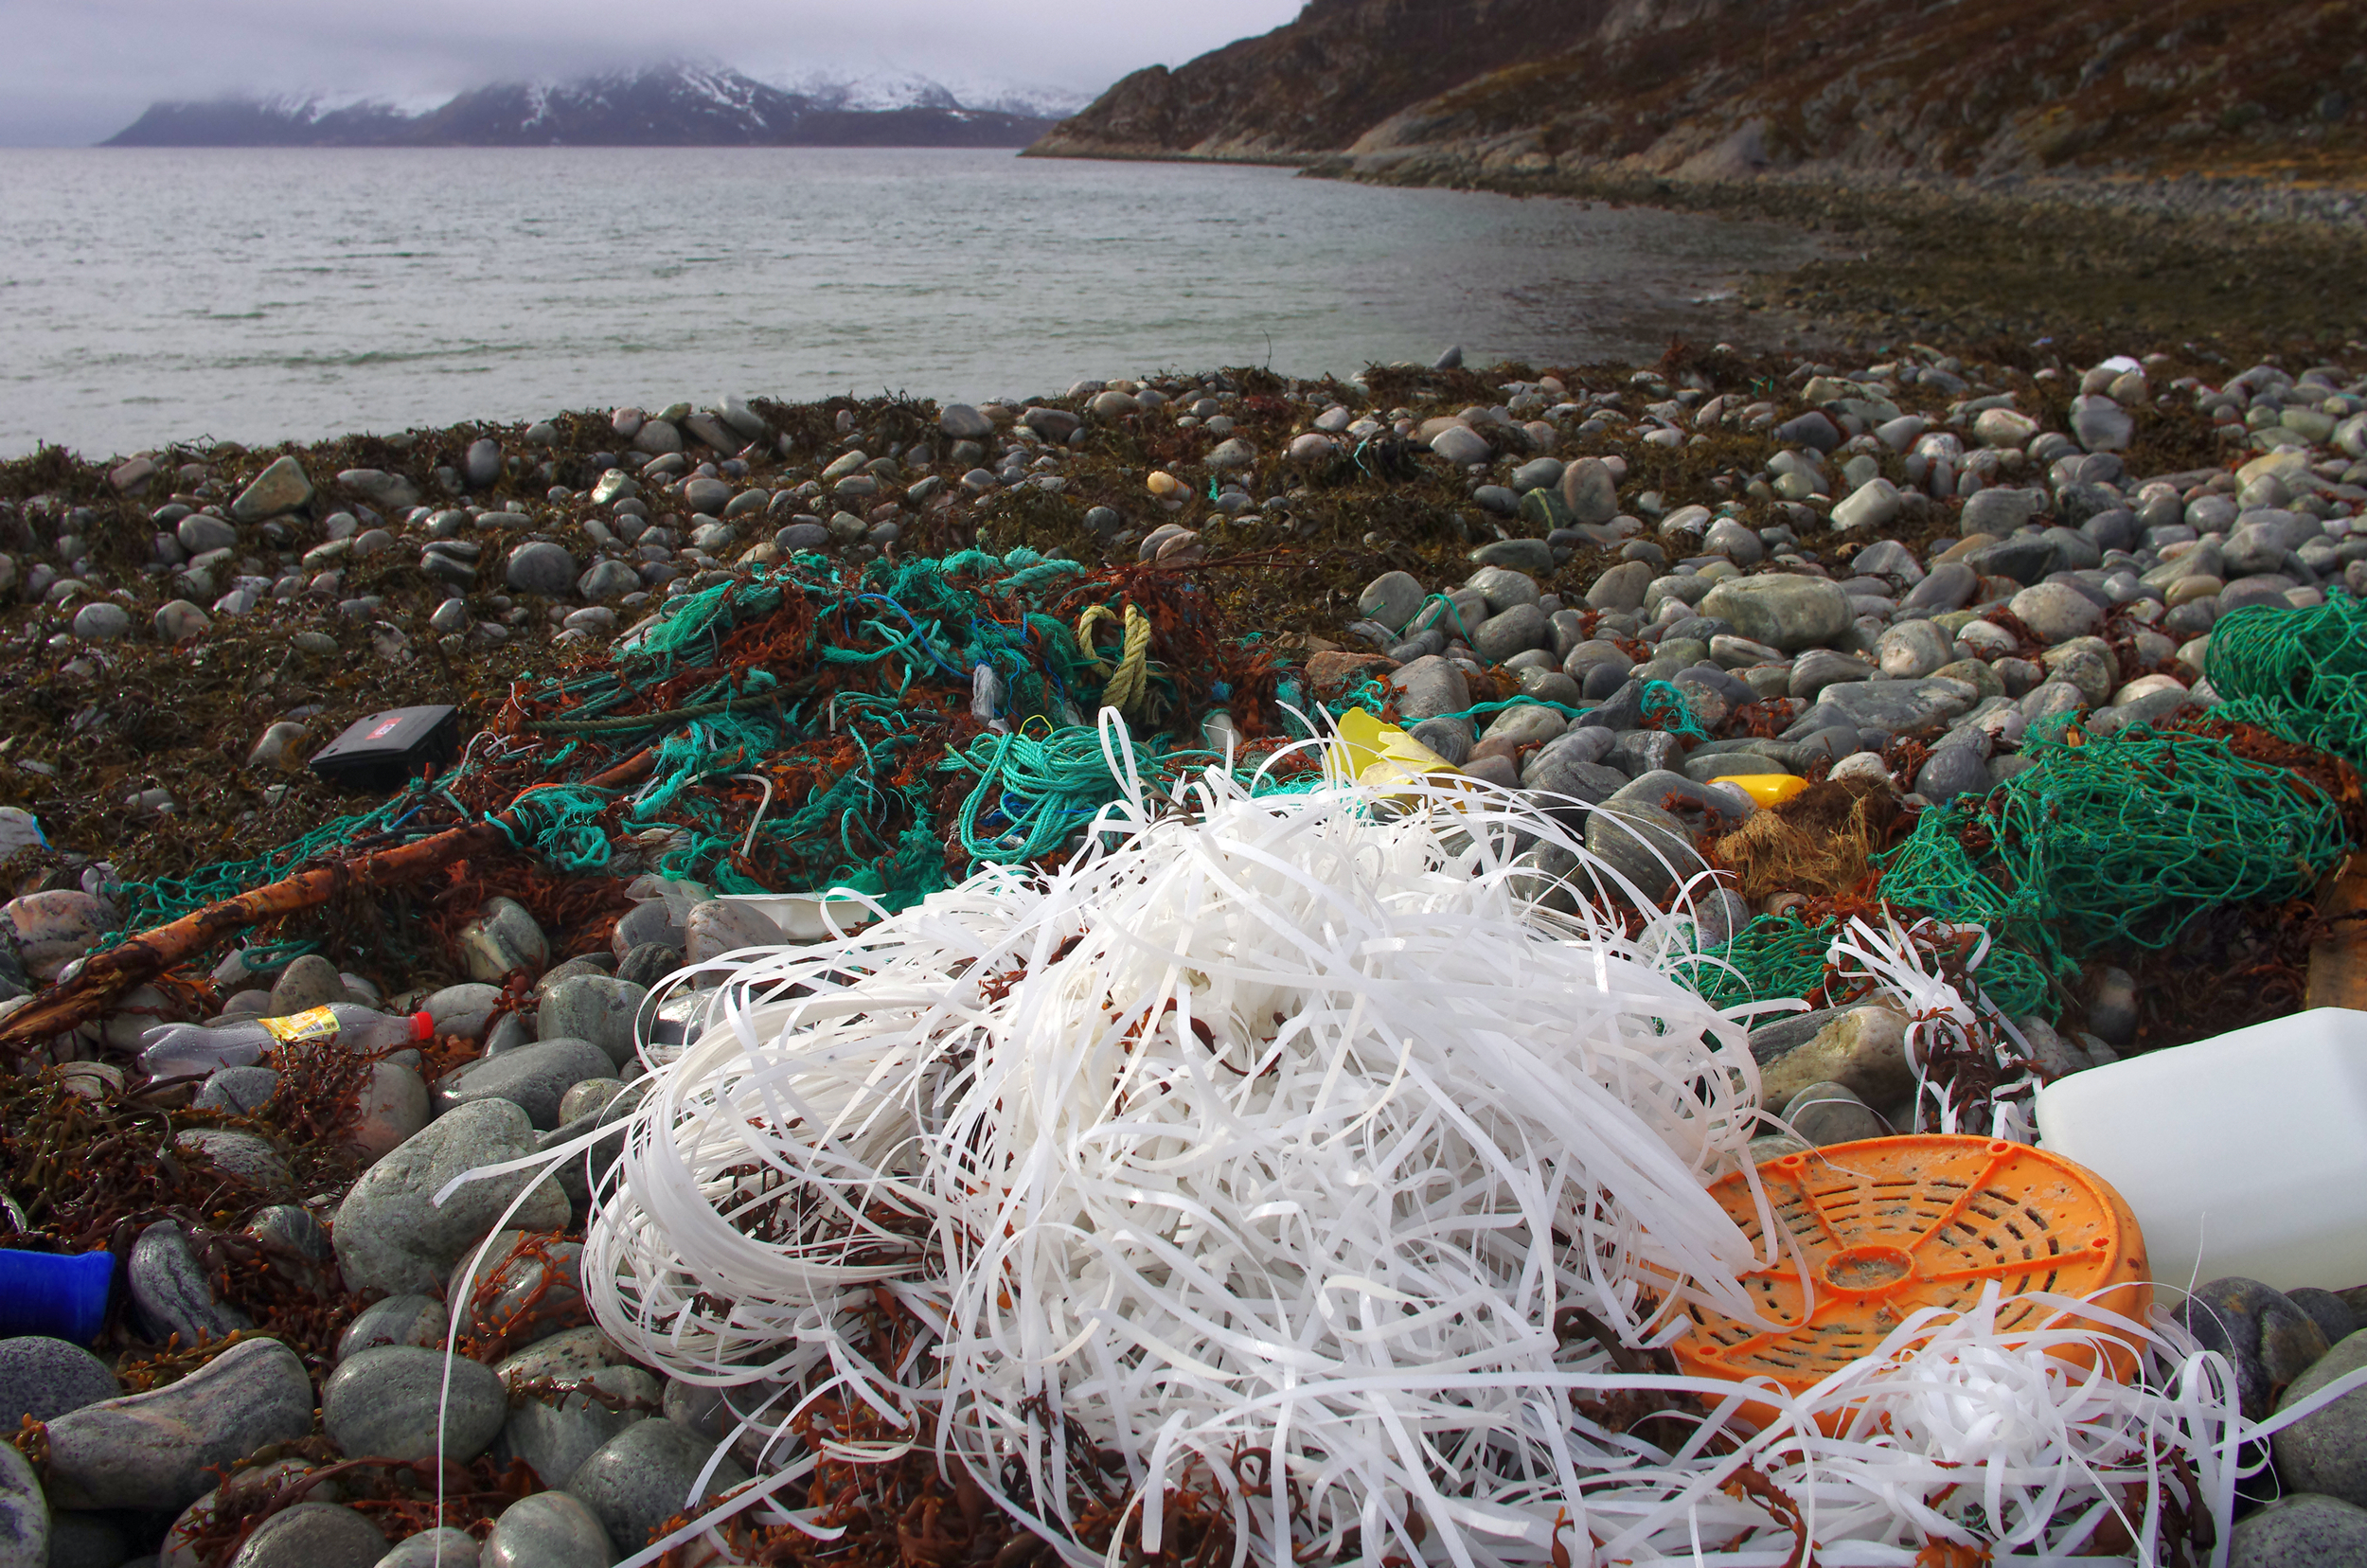 marine debris on beach